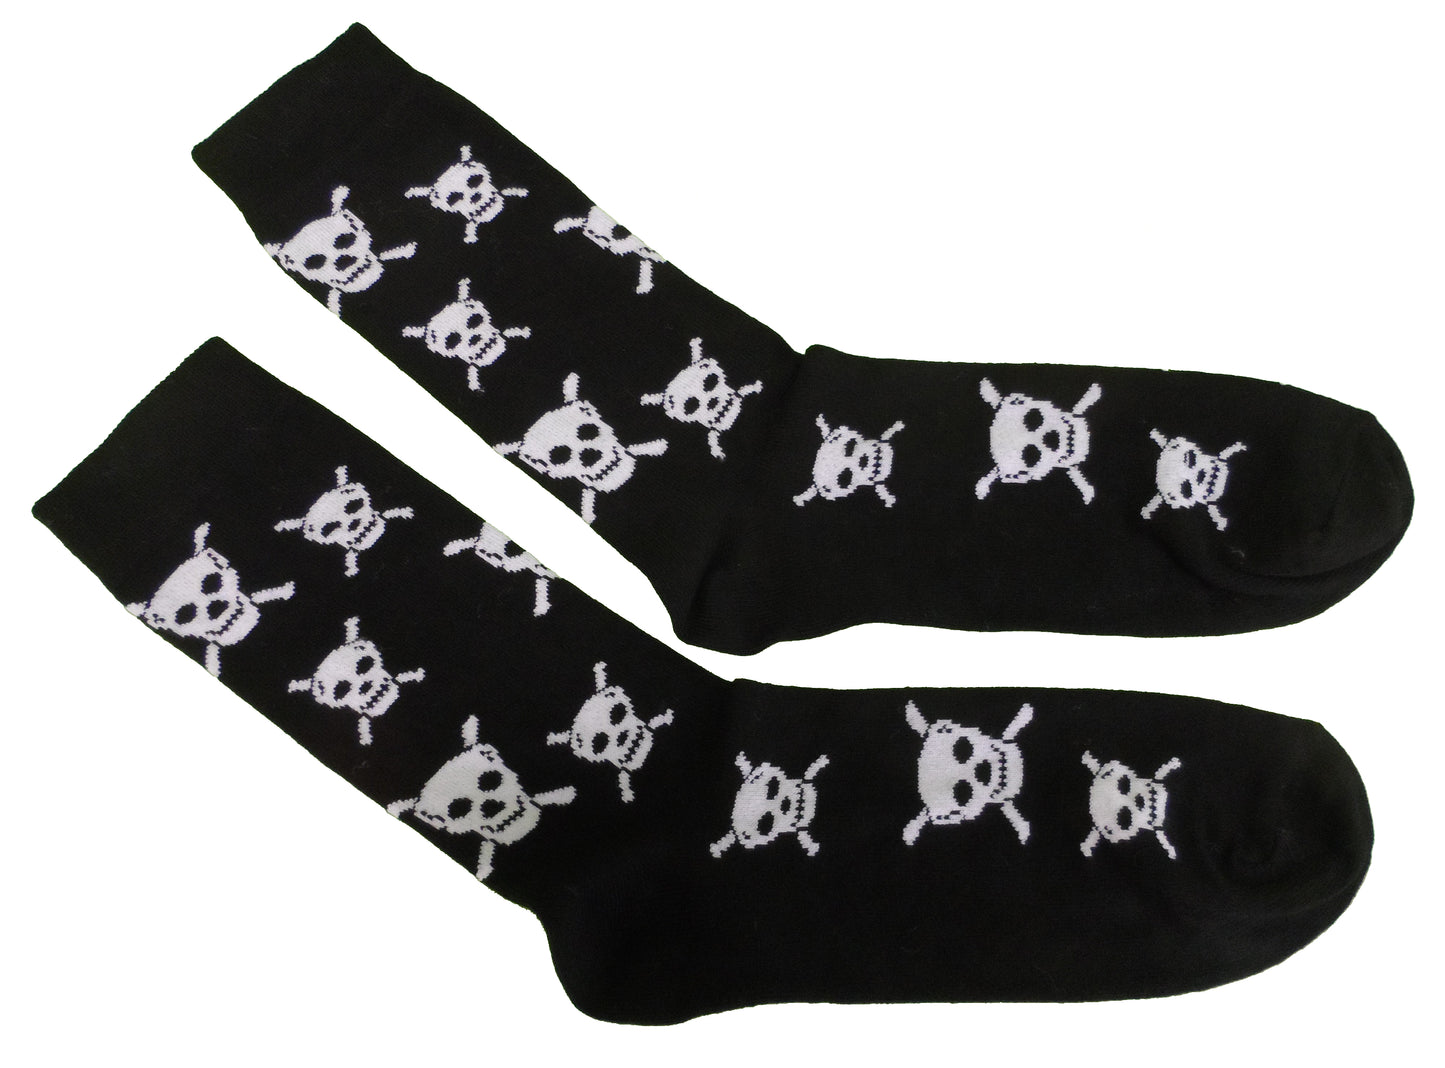 Mens 2 Pair Pack of Skull and Crossbones Socks